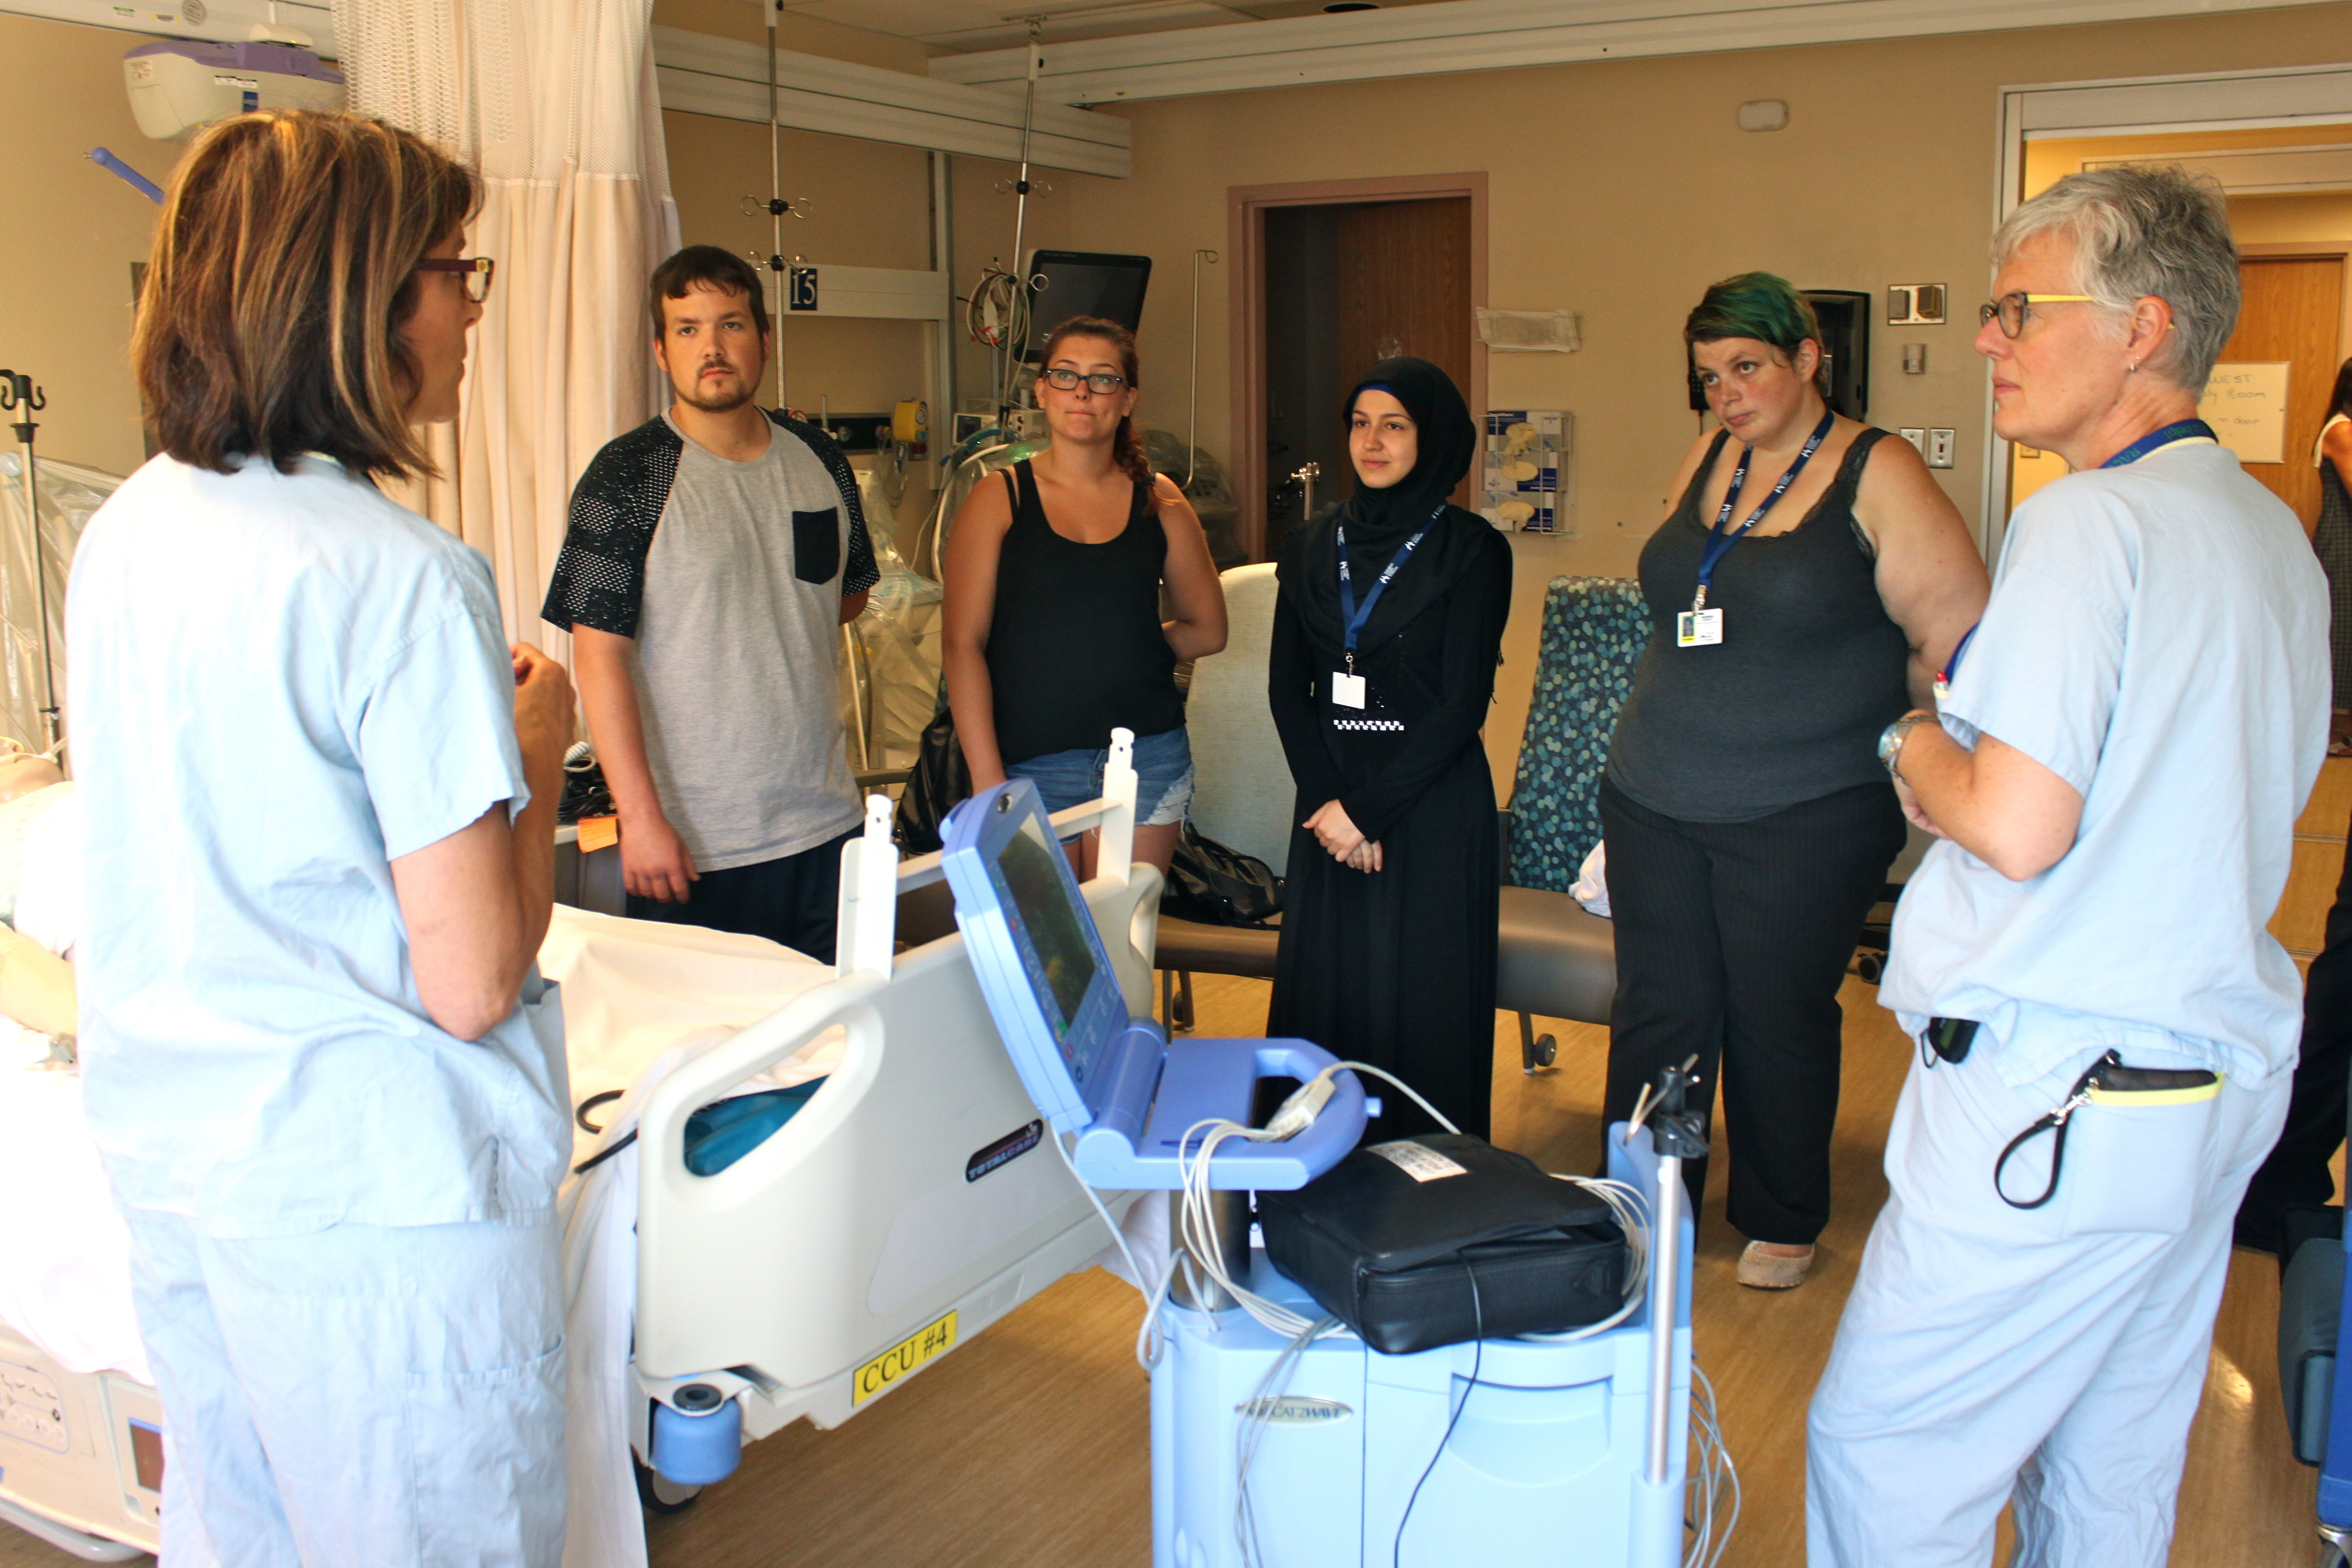 students listen as ICU staff explain patient care using a simulation mannequin